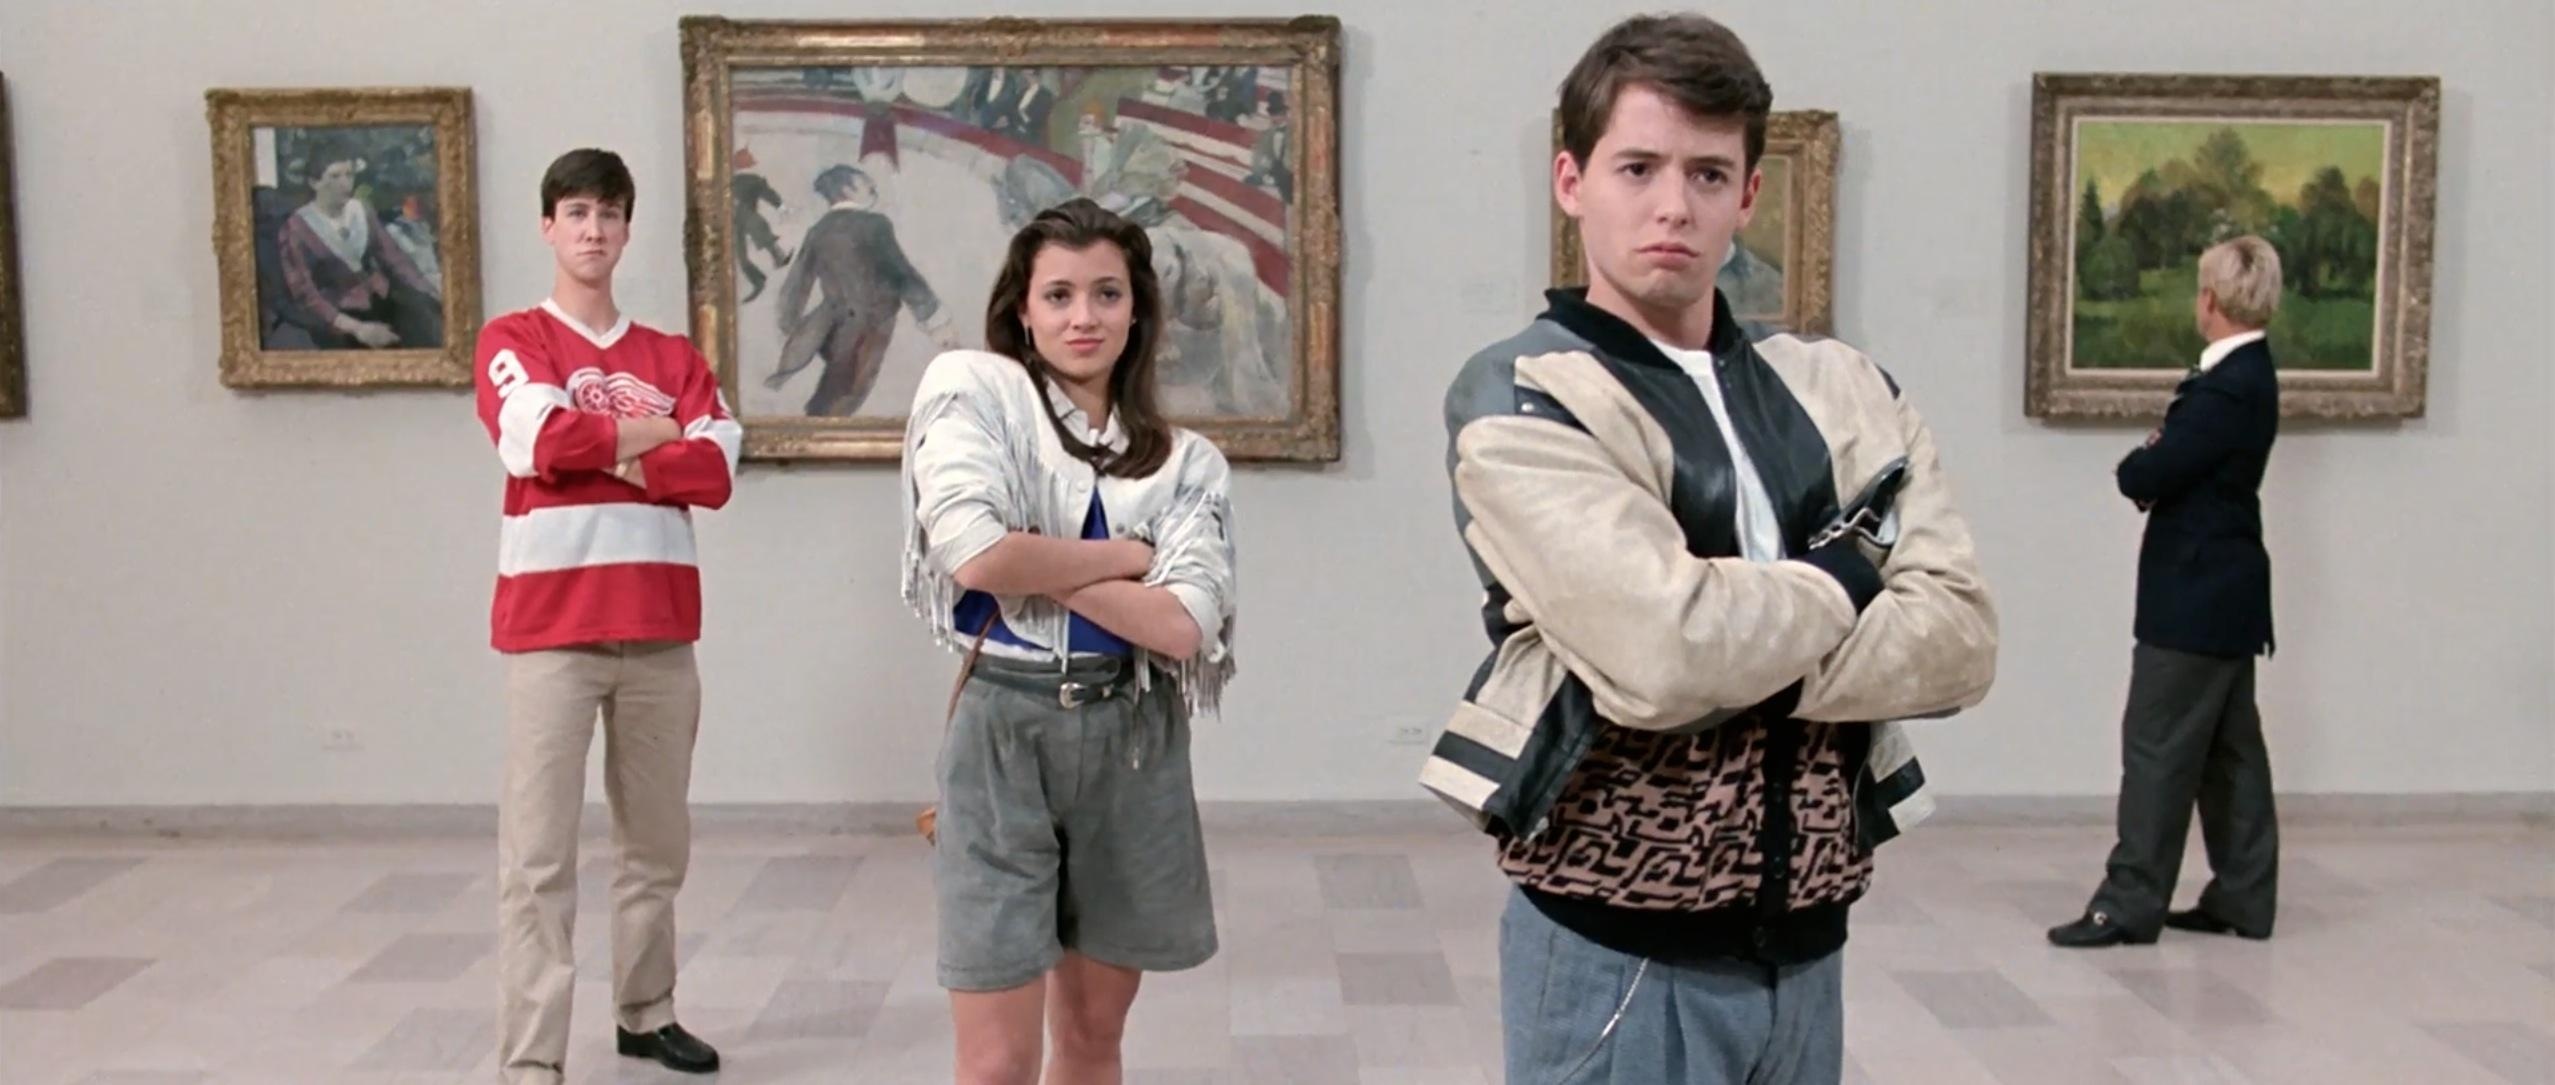 Ferris Bueller, Iconic movie, High school hijinks, John Hughes, 2560x1090 Dual Screen Desktop